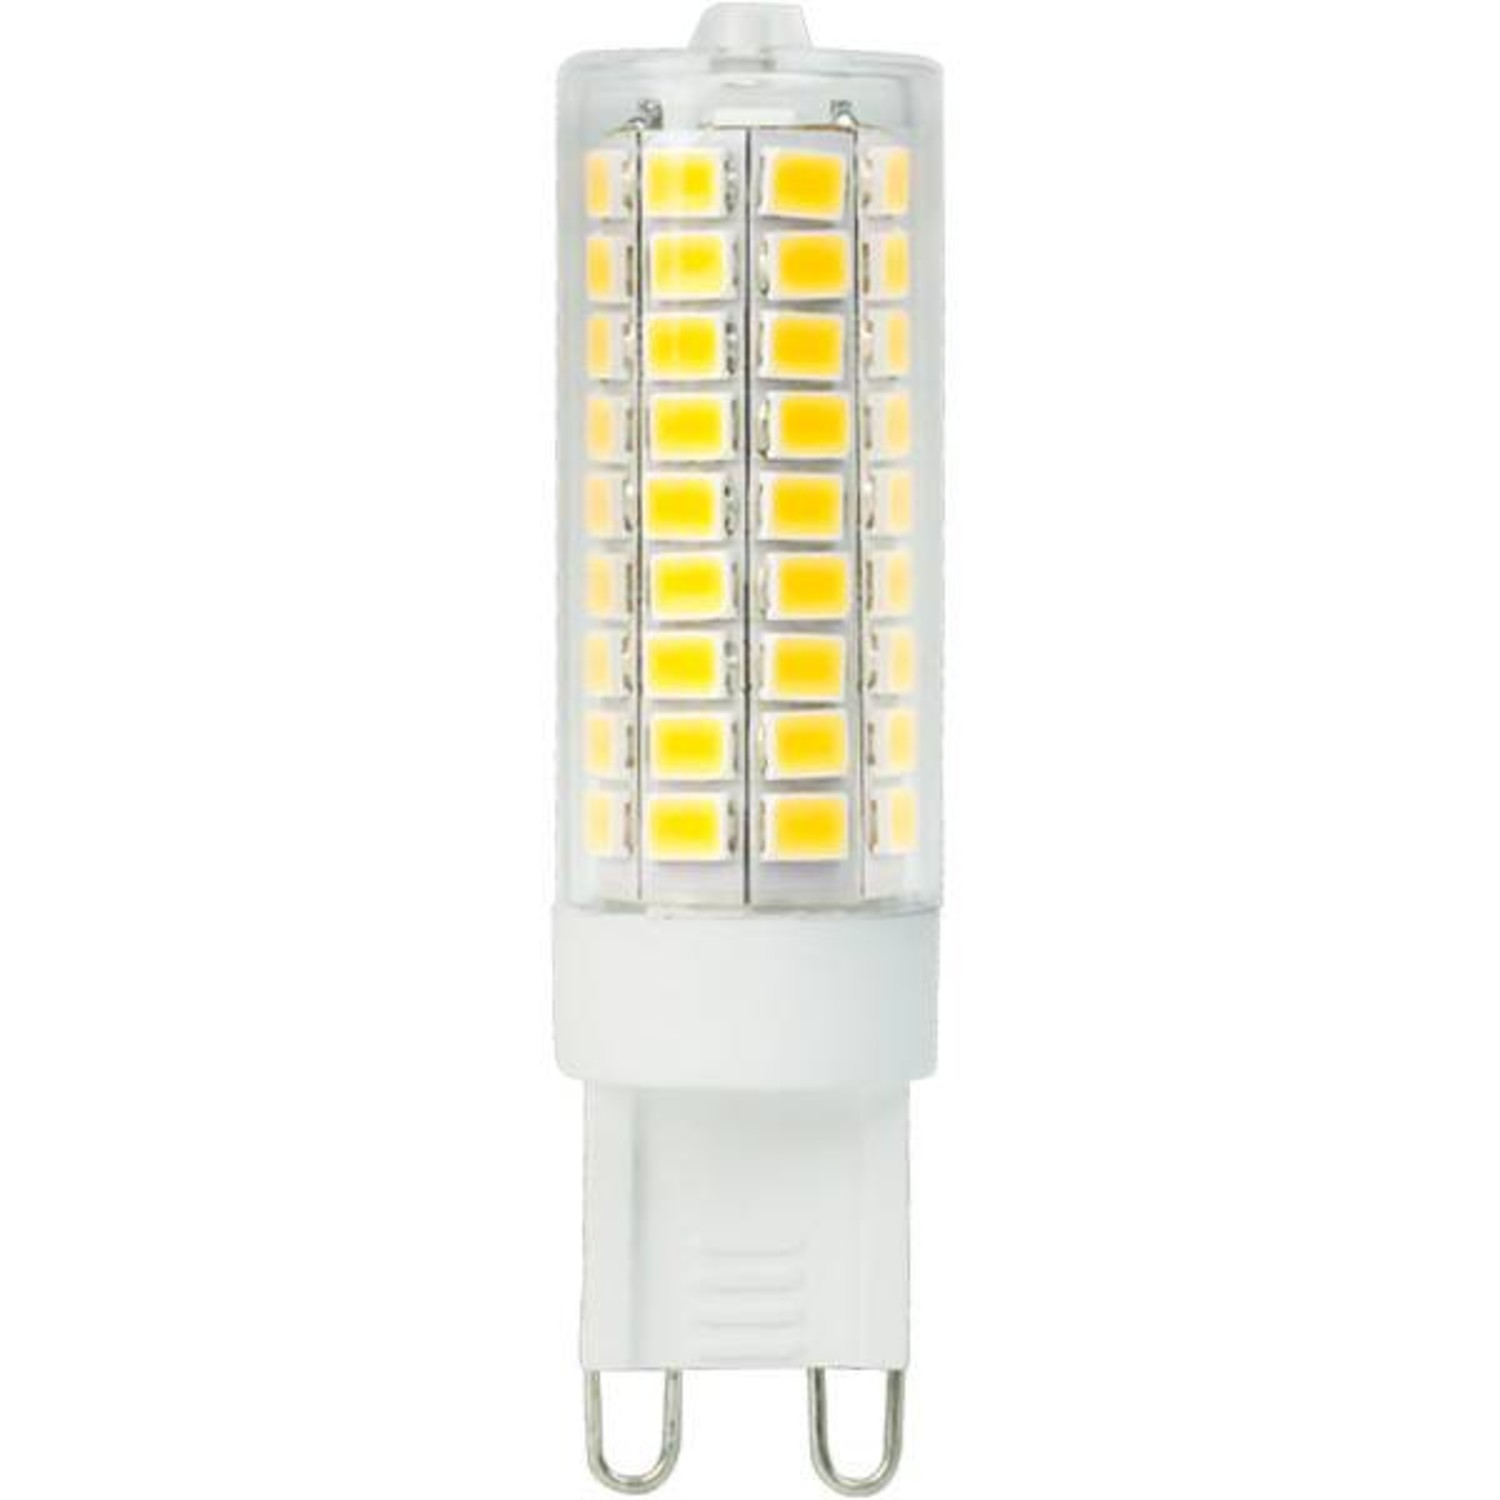 Effectiviteit Ass Machtig LED G9 - 8W vervangt 75W - 2700K warm wit licht - 19x64 mm -  Ledlichtdiscounter.nl